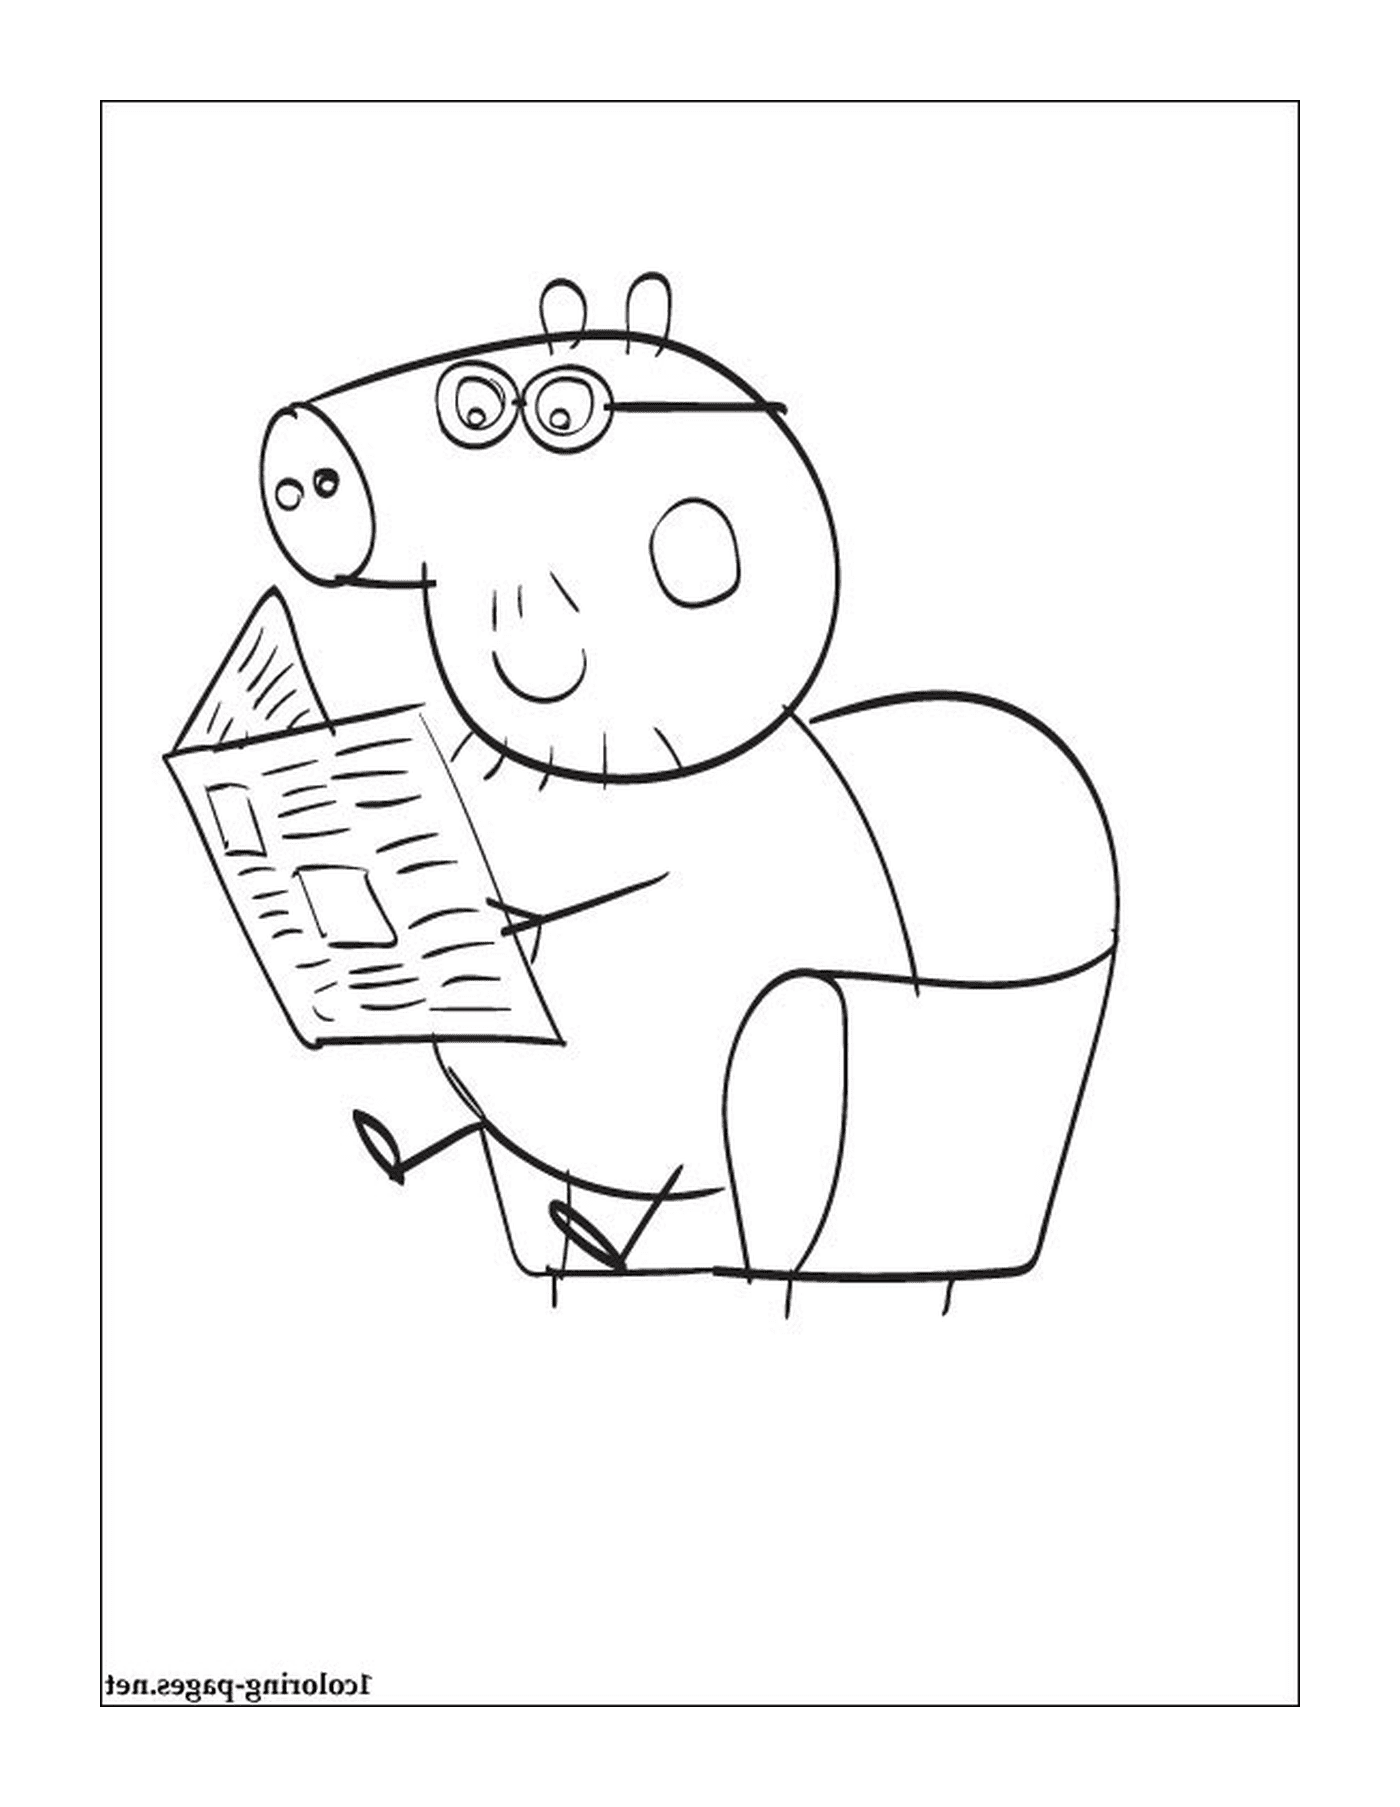  A pig reading a newspaper 